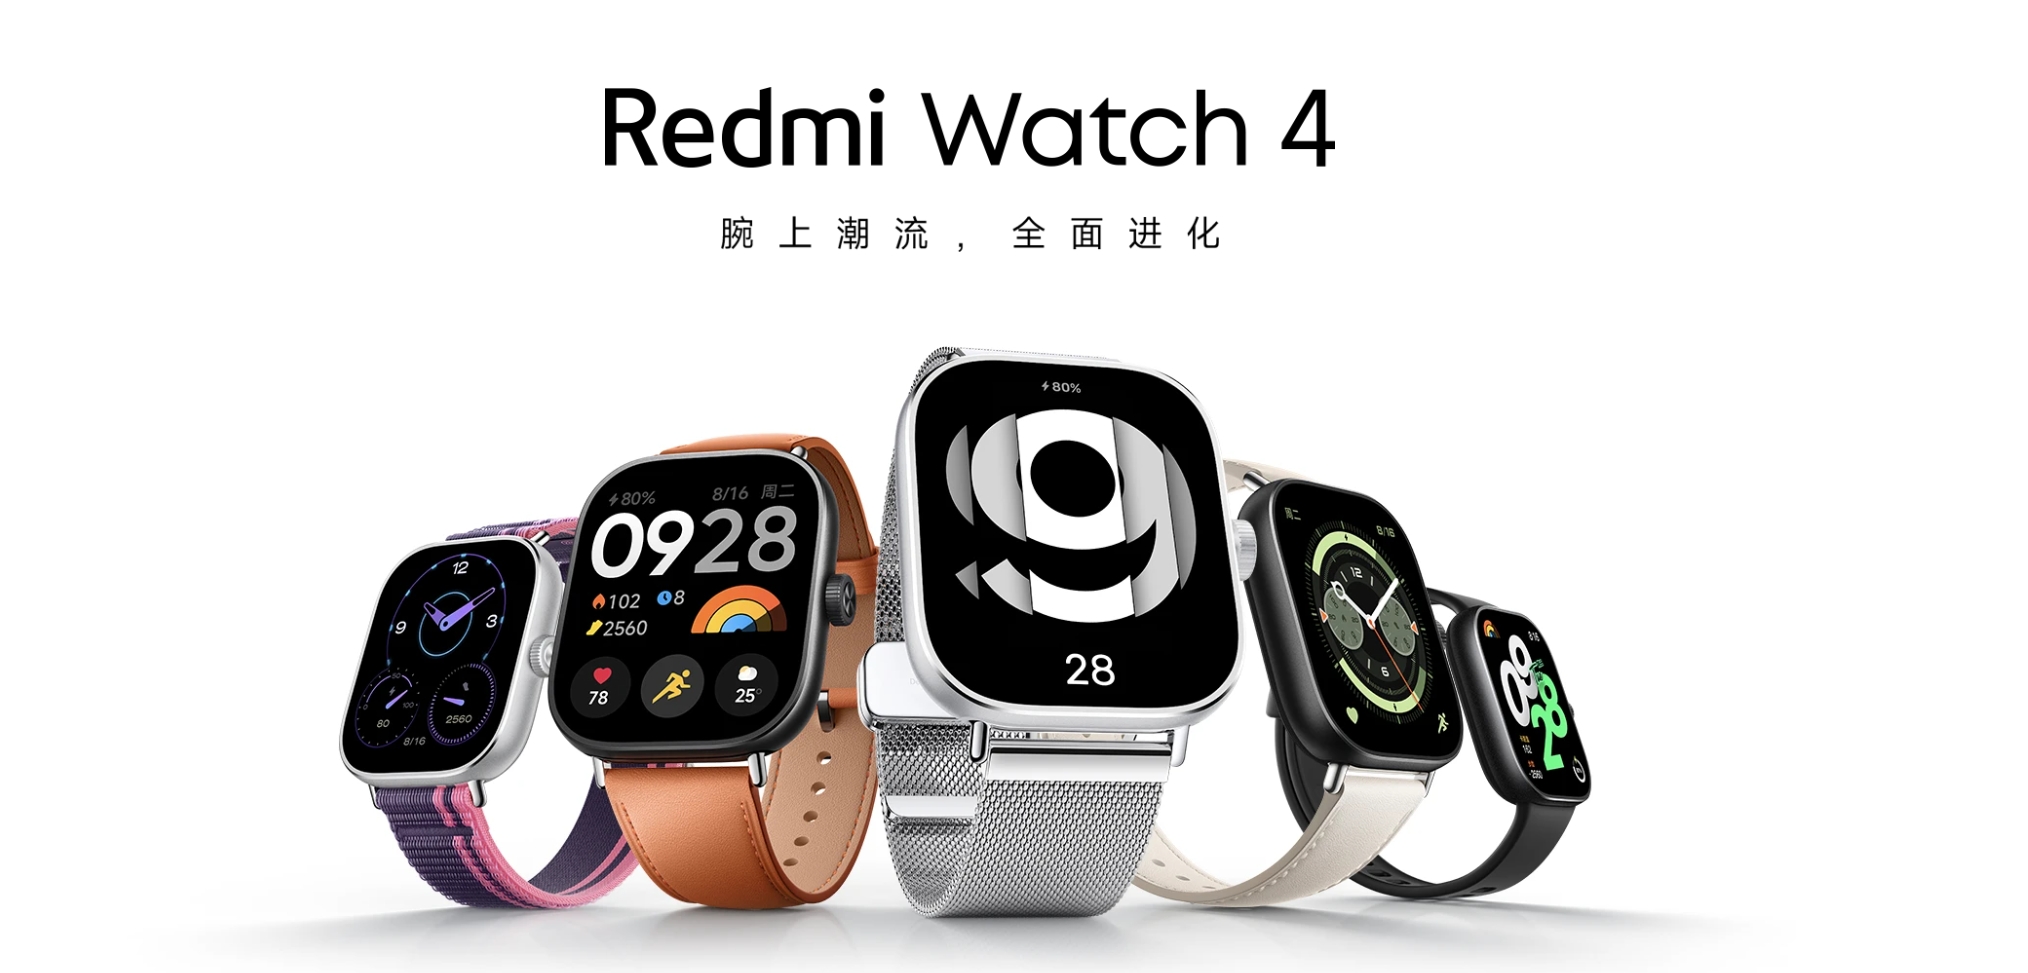 redmi watch 4 to launch with amoled display and aluminum alloy build - Tech  news hindi - Redmi Watch 4 में होगा AMOLED डिस्प्ले और एल्युमिनियम एलॉय  बिल्ड; फीचर्स लीक, गैजेट्स न्यूज